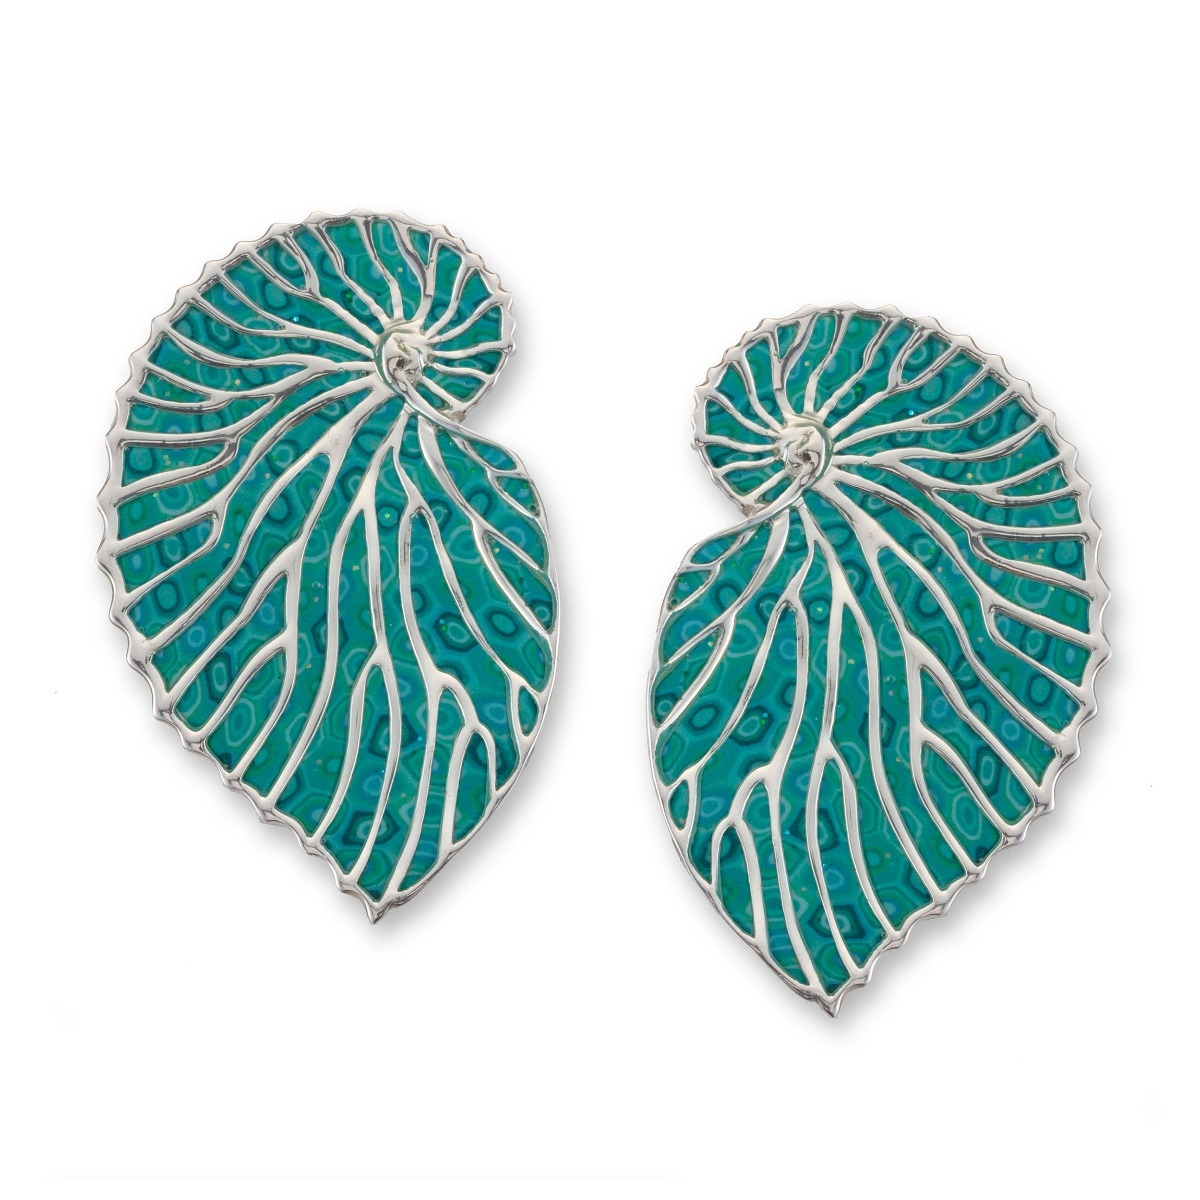 Adina Plastelina Silver Nautilus Shell Earrings - Turquoise - 1